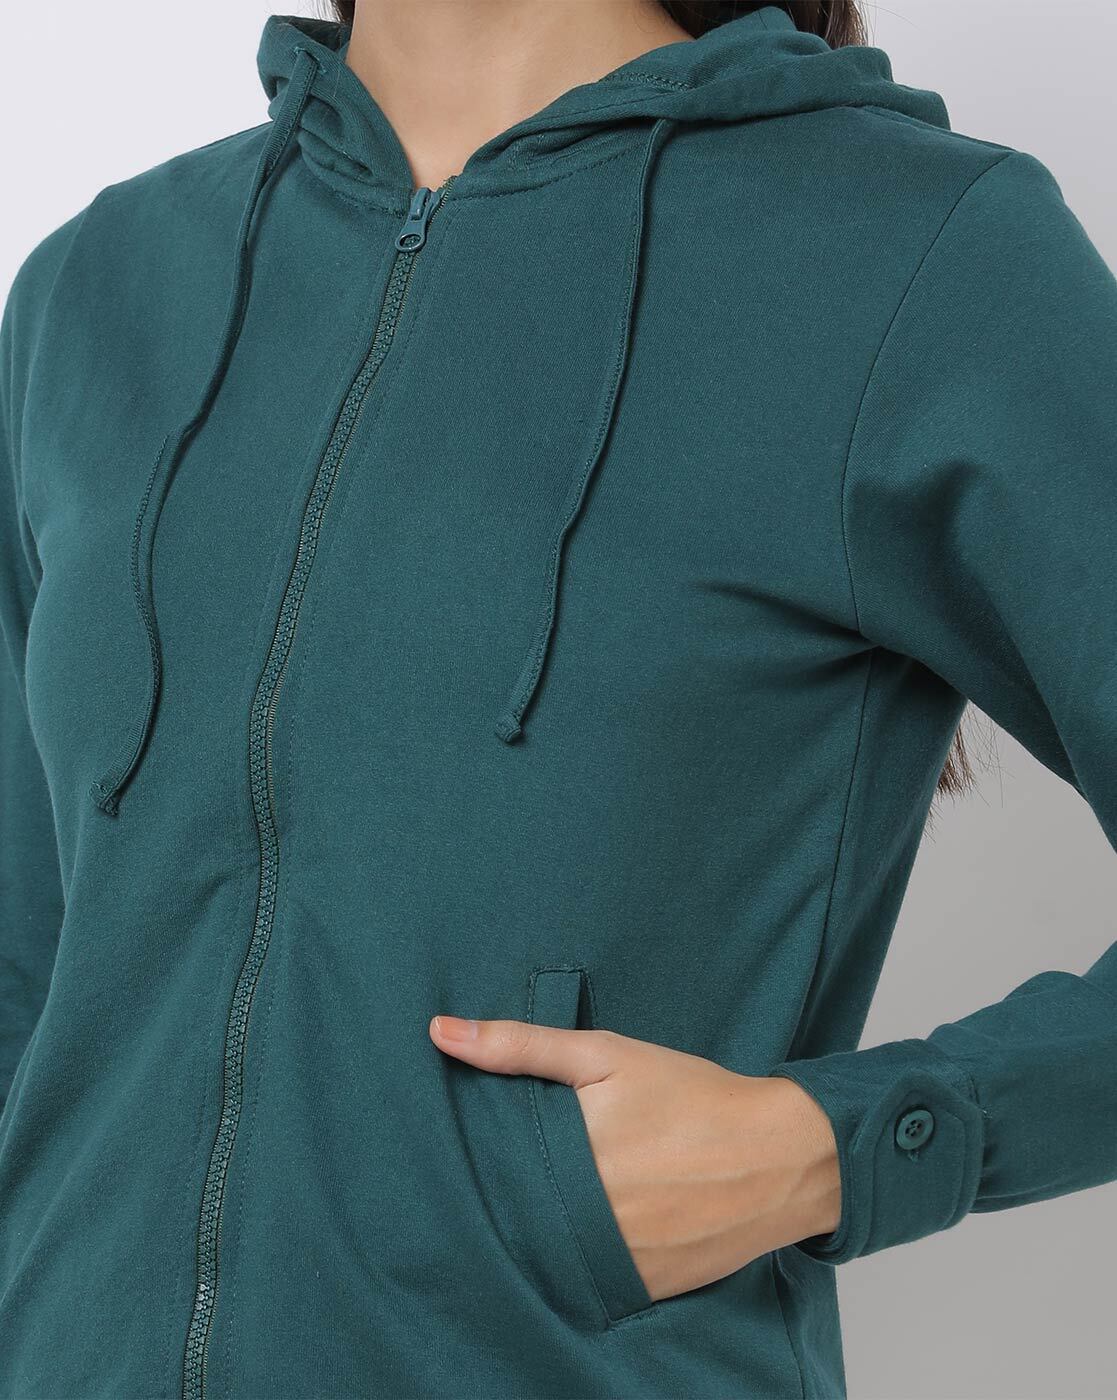 Buy Green Sweatshirt & Hoodies for Women by Urban Hug Online